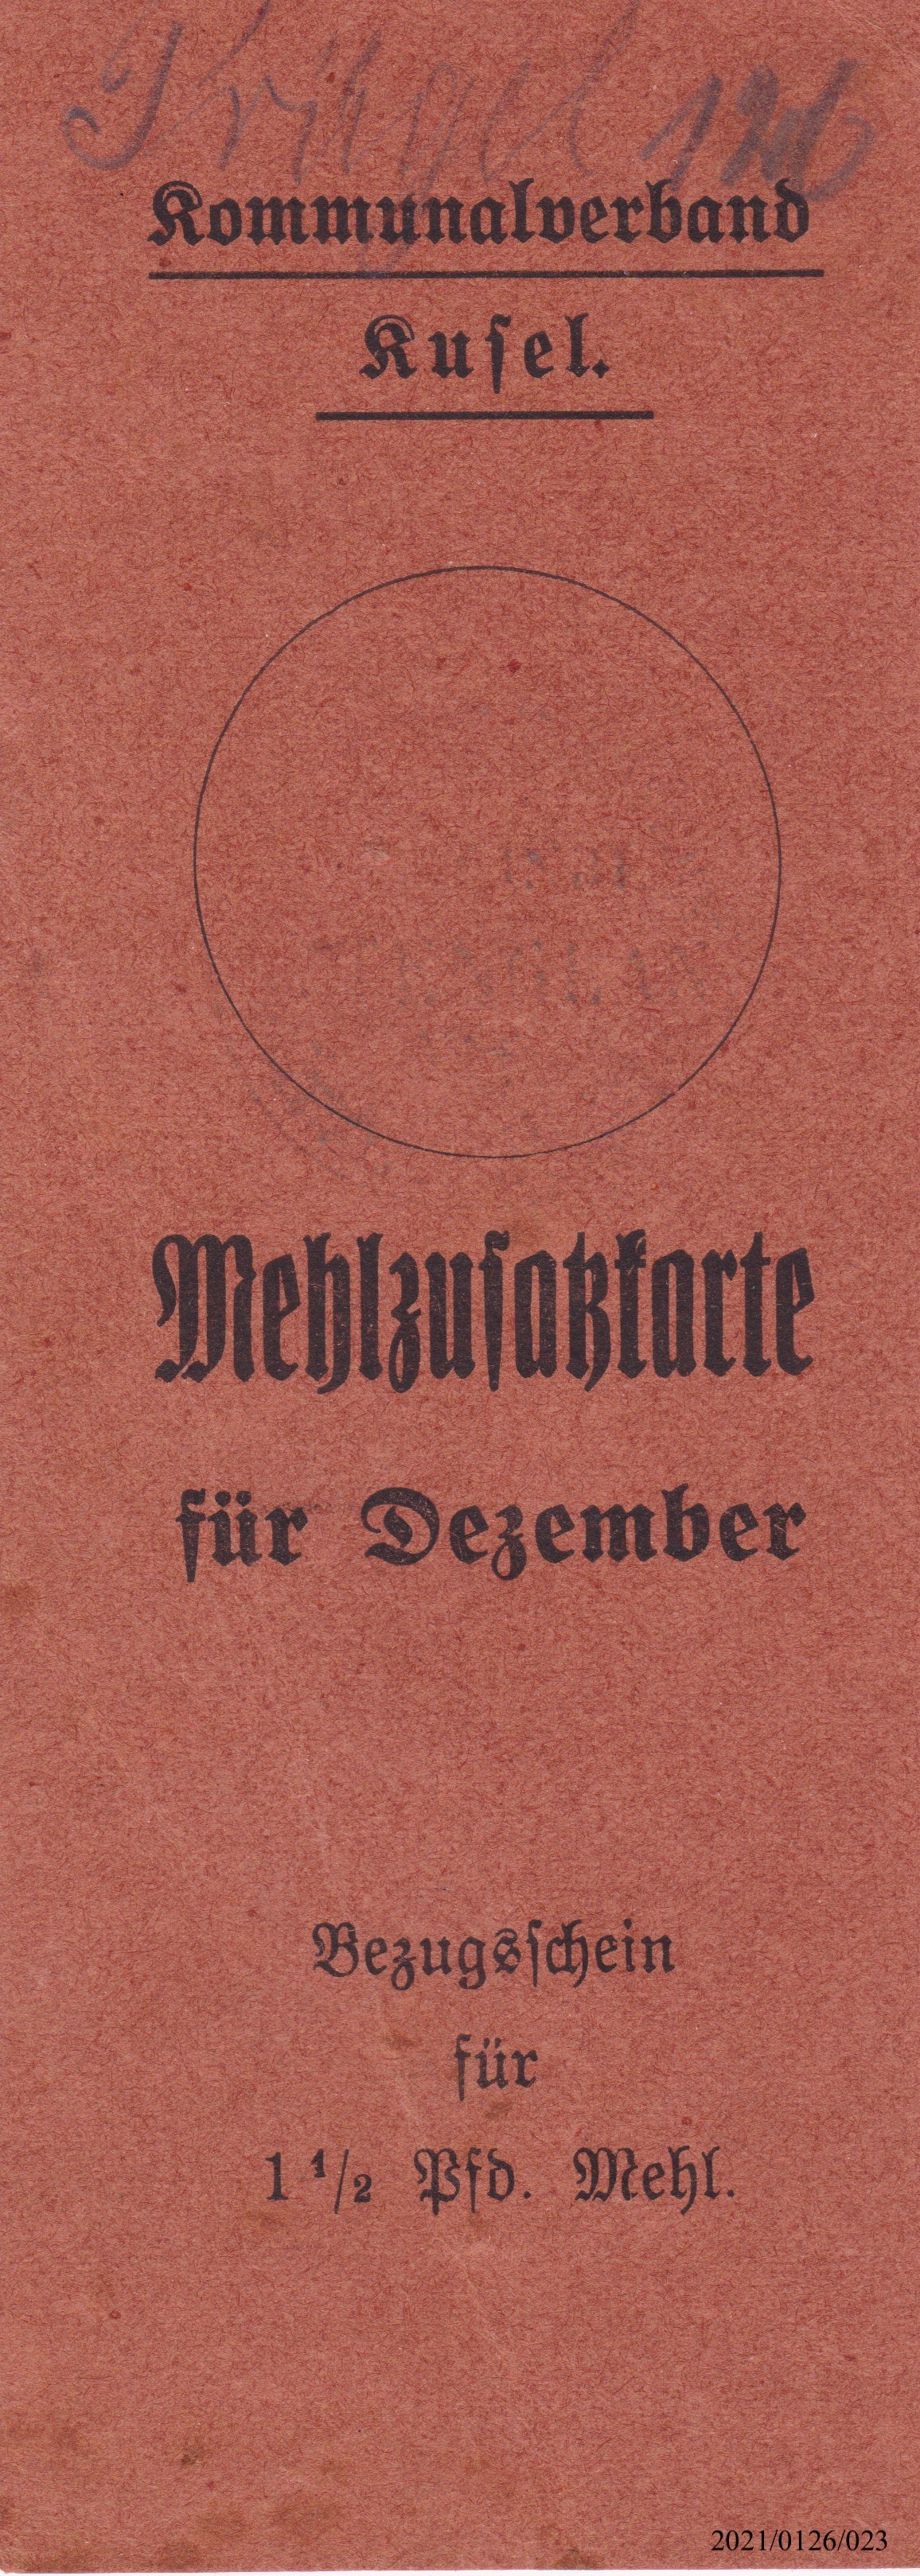 Mehlzusatzkarte für Dezember Kommunalverband Kusel 1918(?) (Museumsgesellschaft Bad Dürkheim e. V. CC BY-NC-SA)